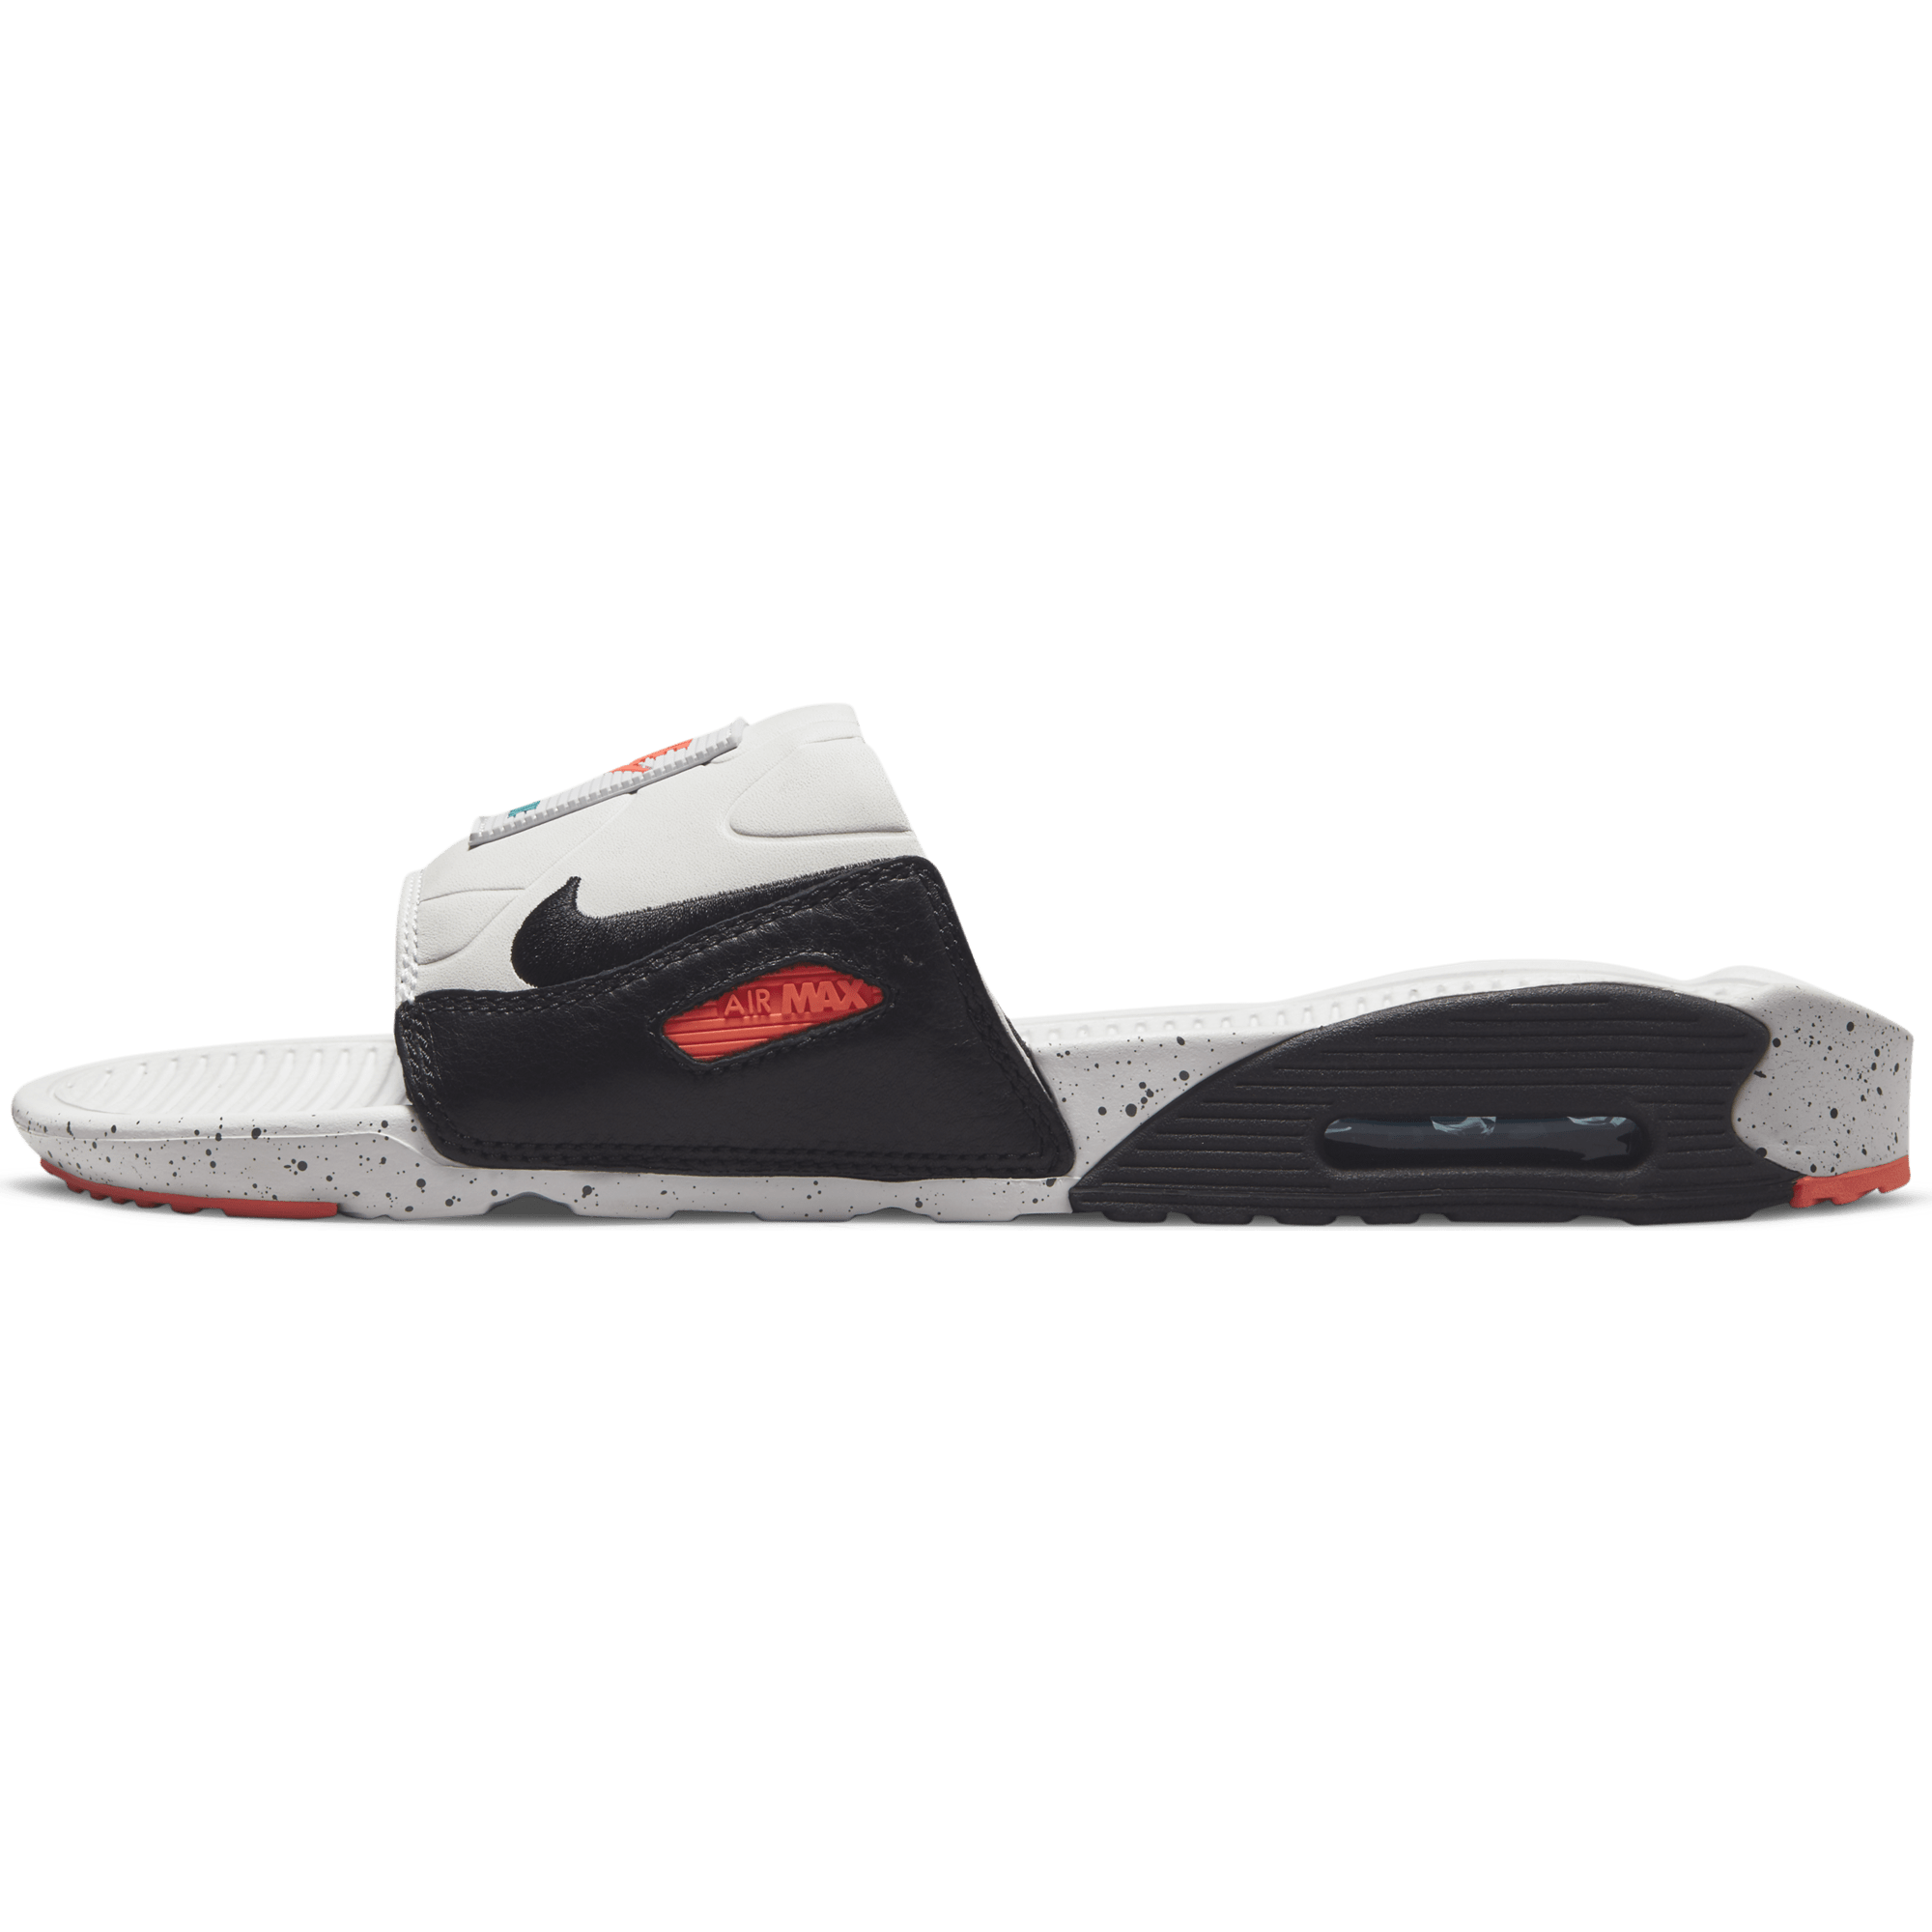 Nike Slides Nike Air Max 90 Slides - Men's